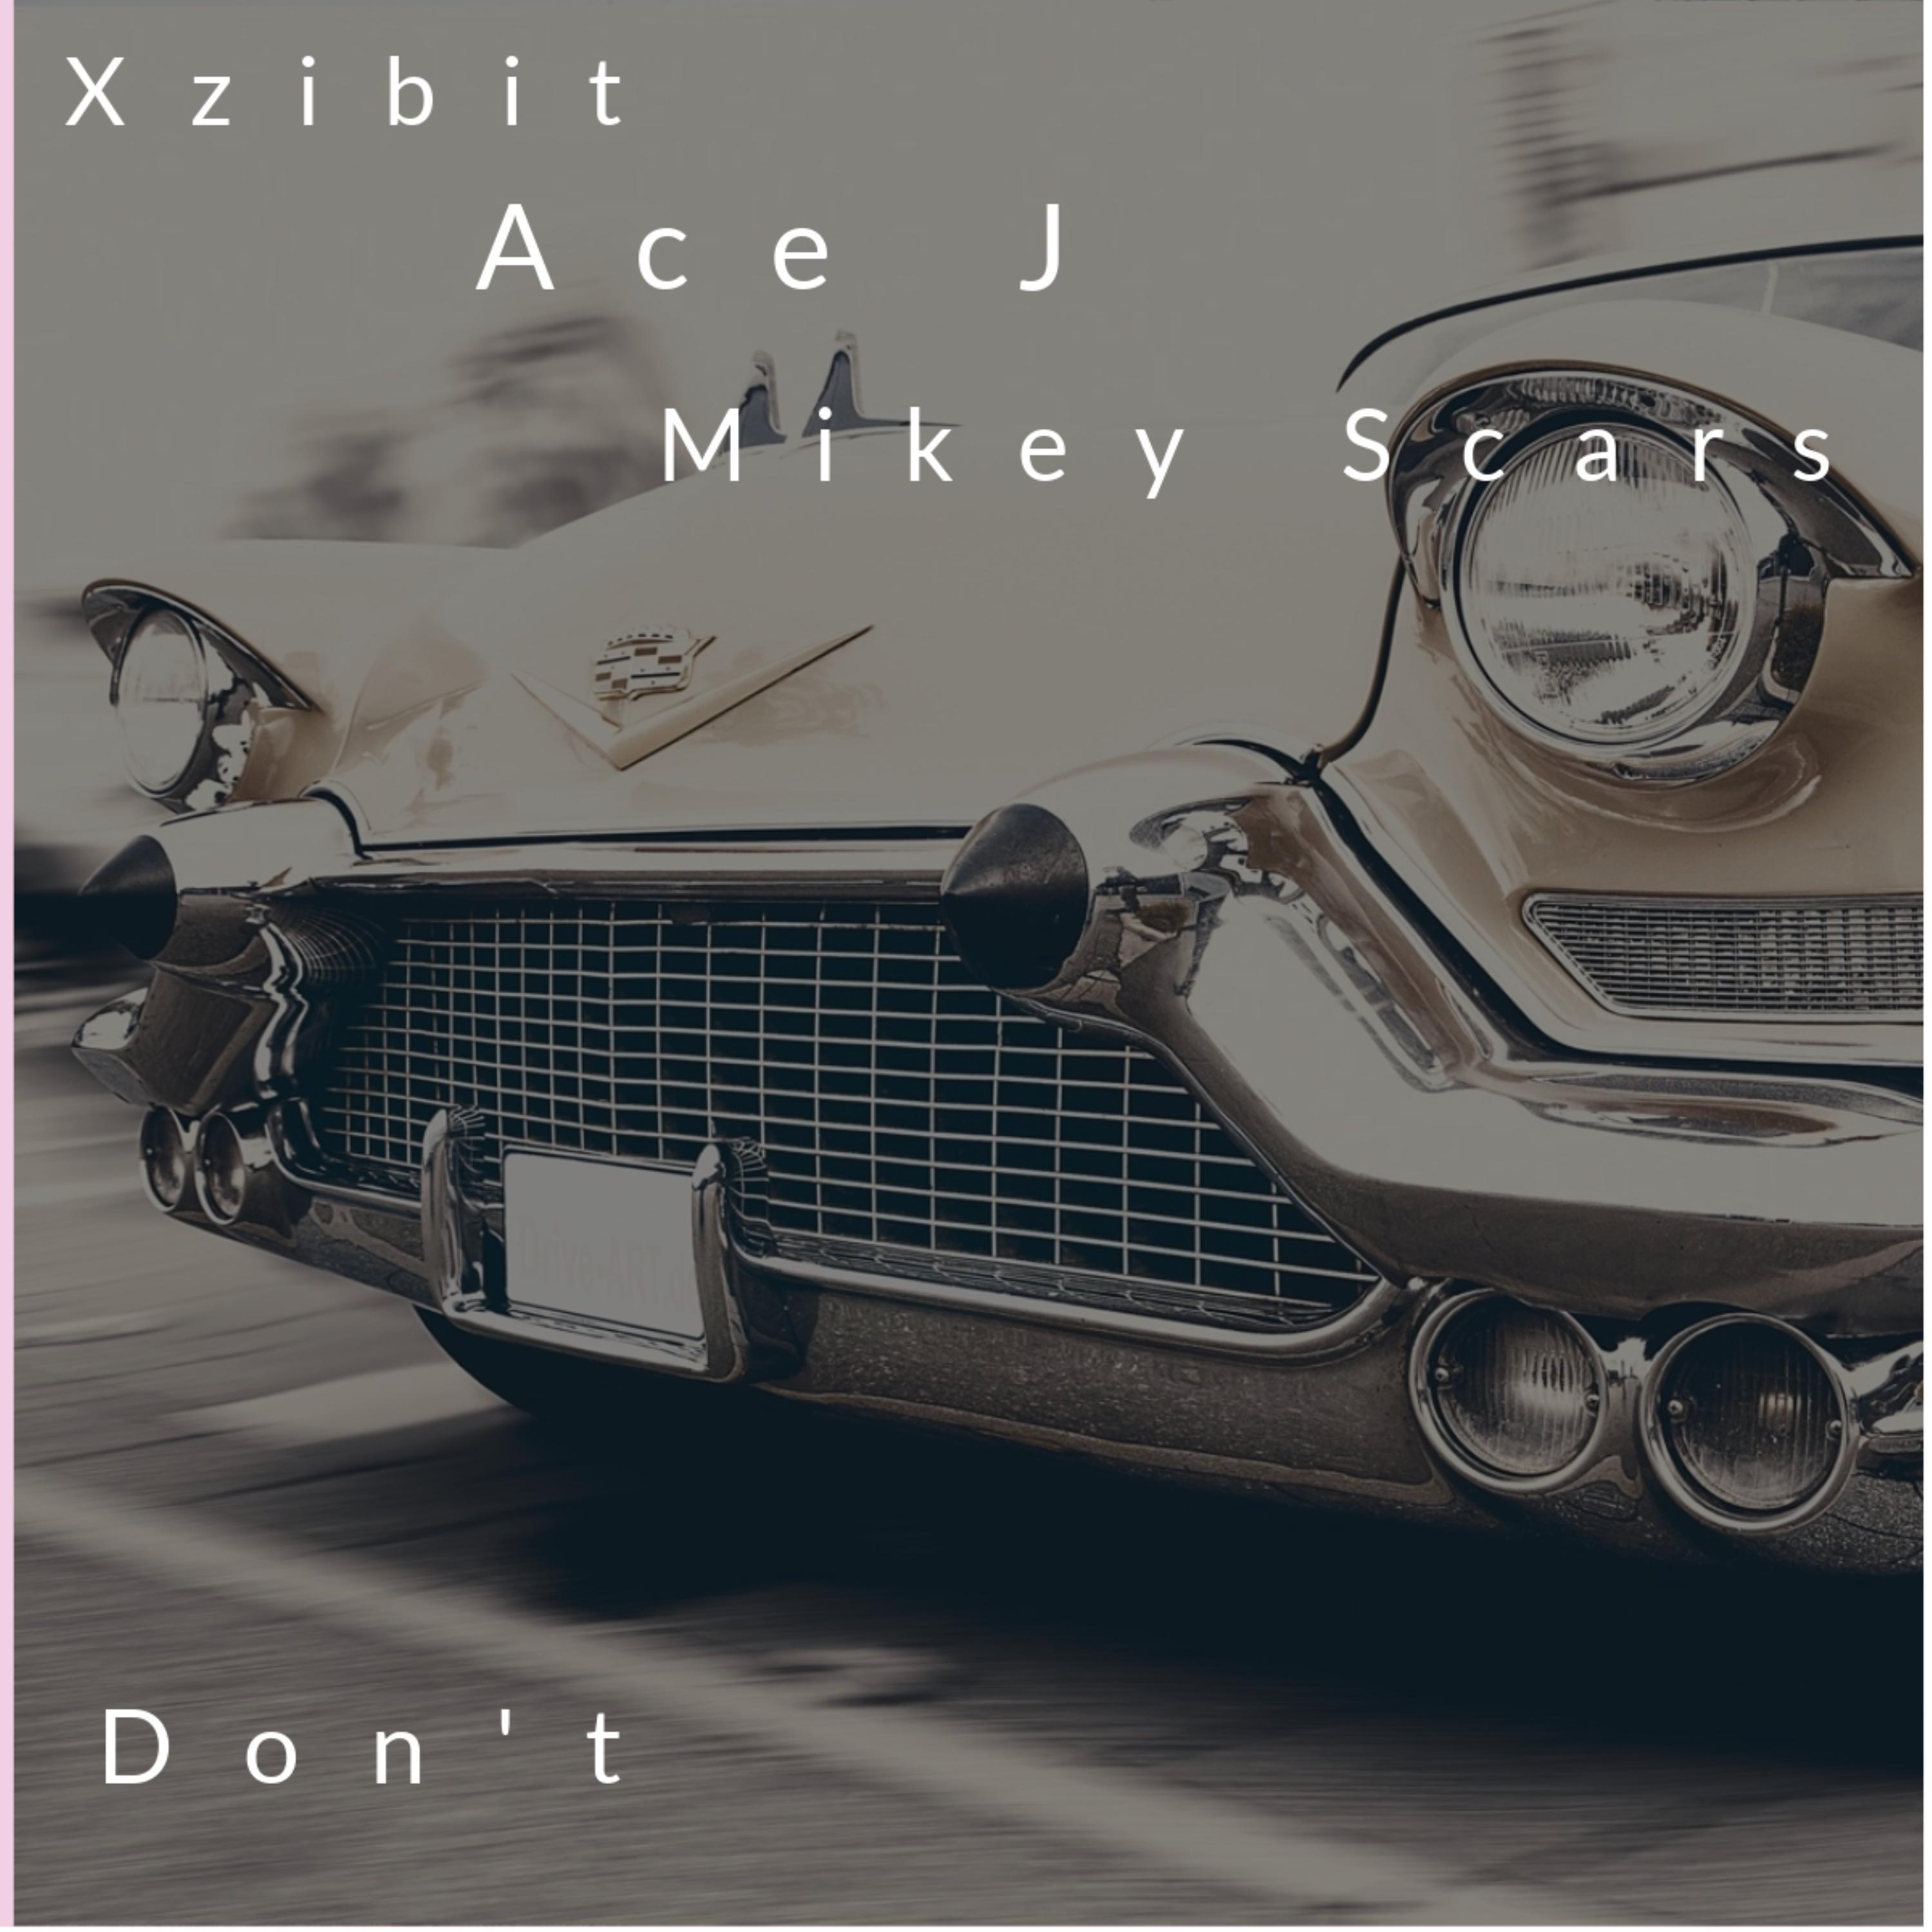 Mikey Scars - Don't (feat. Ace J & Xzibit)